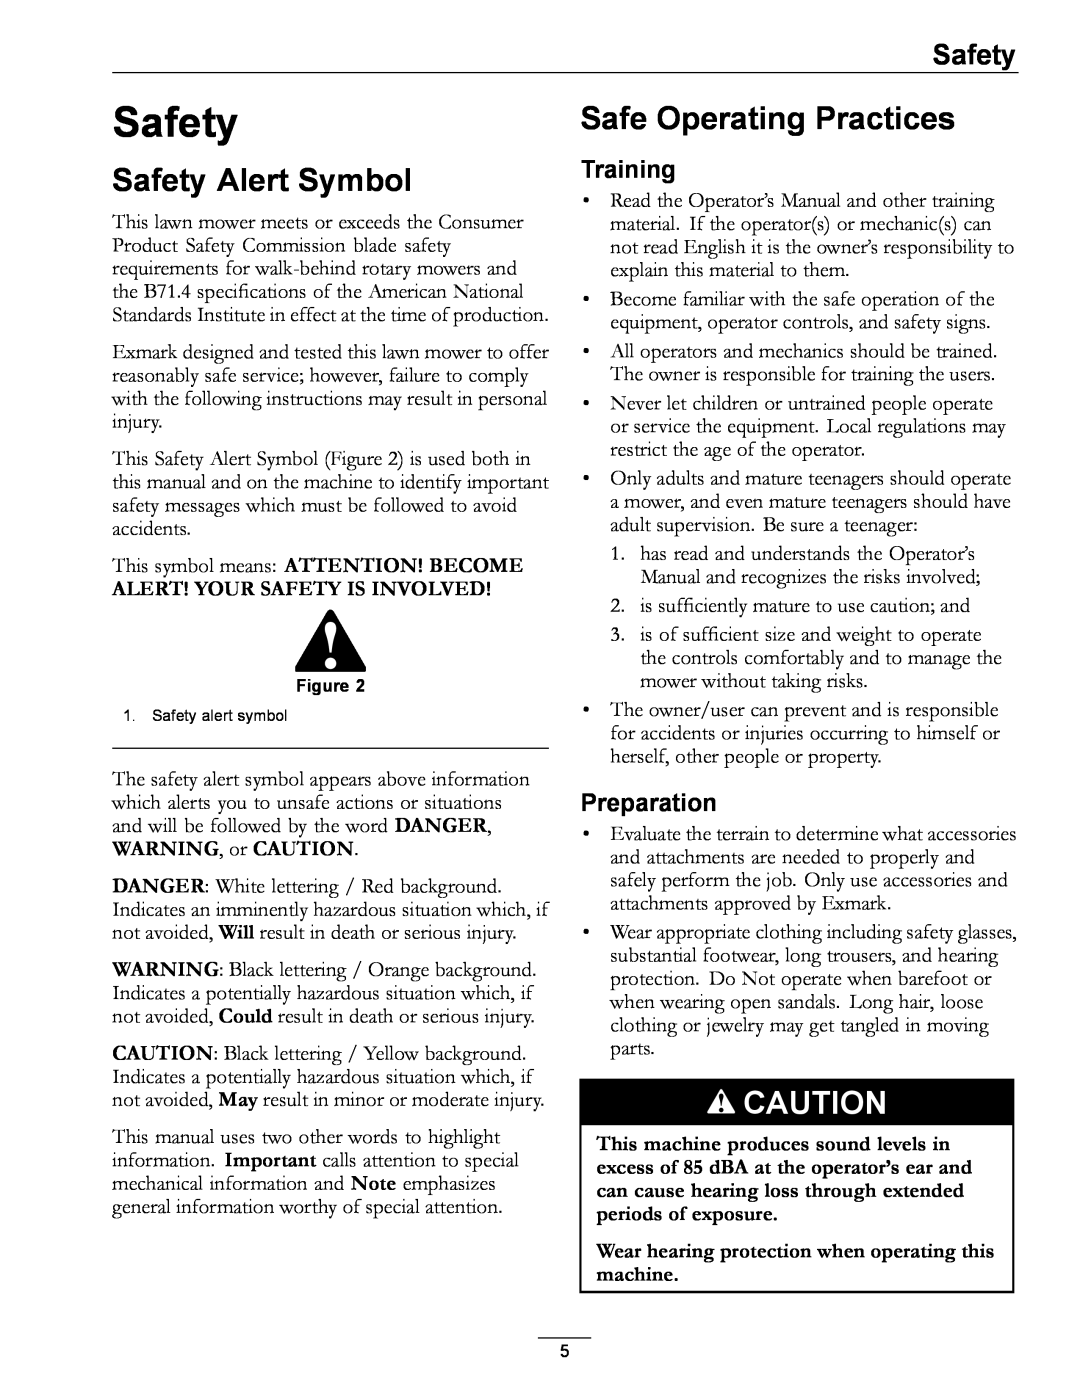 Exmark 850, 000 & higher manual Safety Alert Symbol, Safe Operating Practices, Training, Preparation 